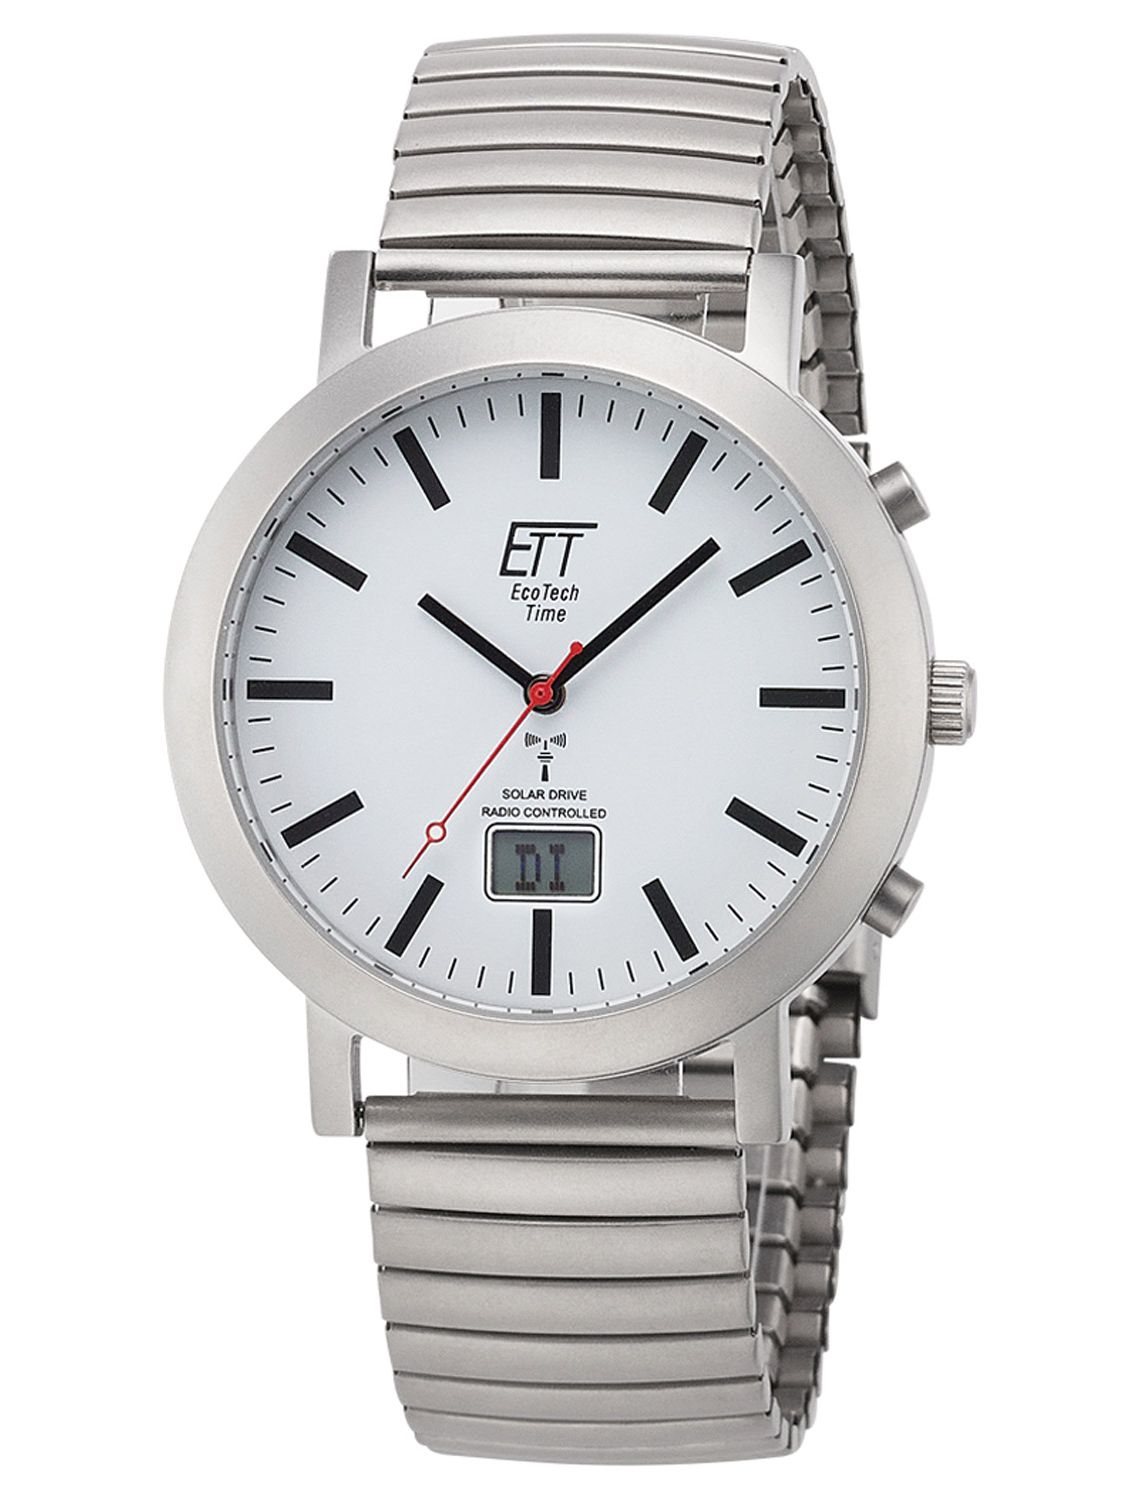 ETT Eco Tech Time Herren-Armbanduhr mit EGS-11580-11M Zugband uhrcenter • Watch Station Funk-Solar